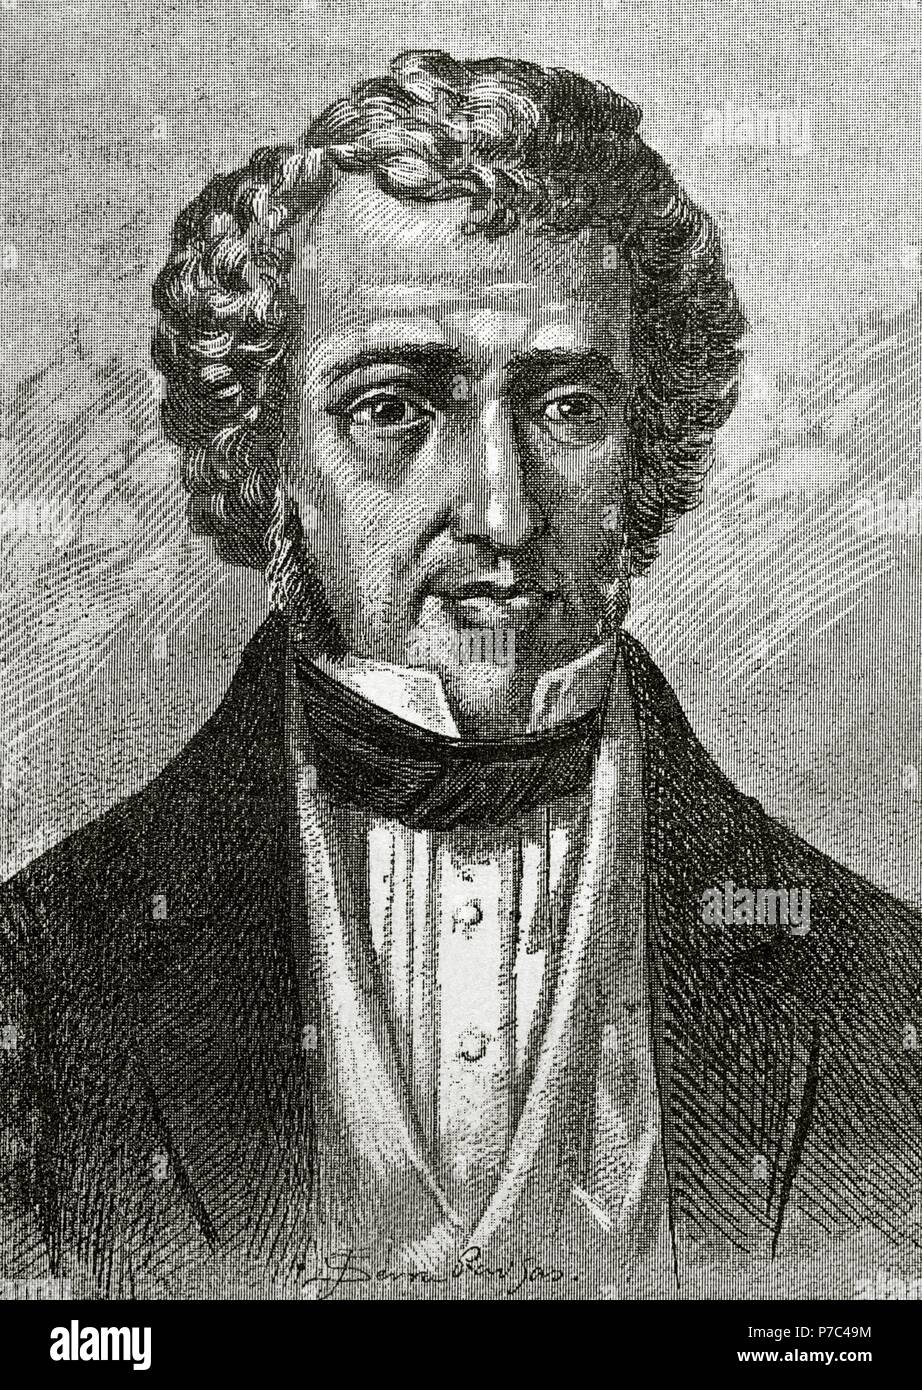 Juan Alvarez Mendizabal (1790-1853). Spanish economist and politician. Portrait by J. Serra Pausas at 'Historia de Espan a', 1882. Engraving. Stock Photo